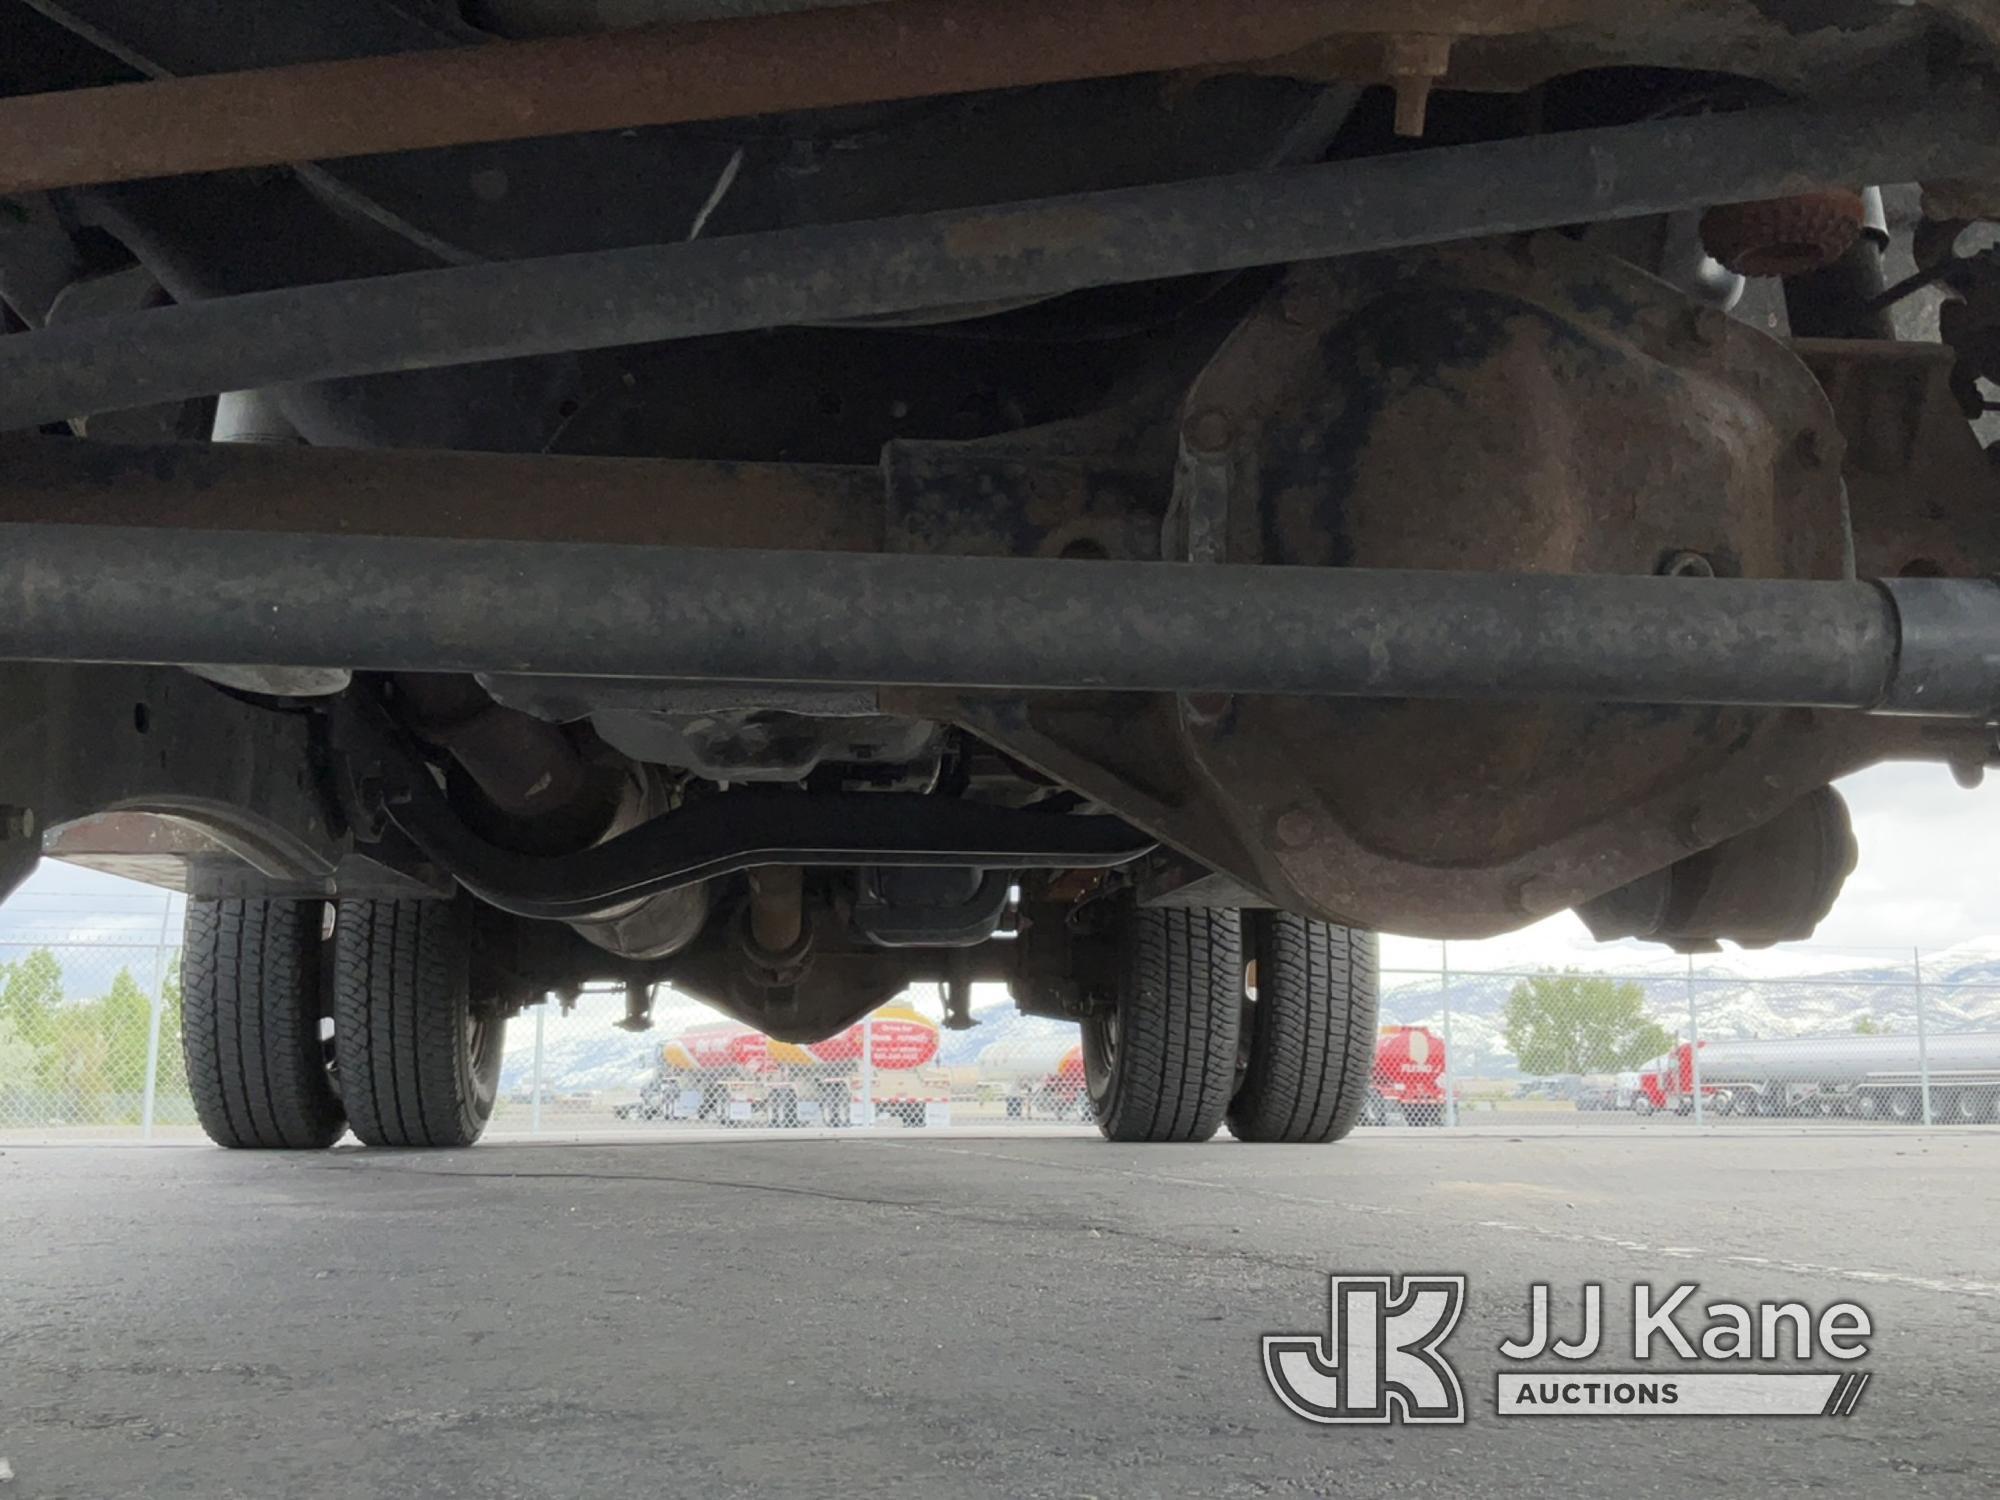 (Salt Lake City, UT) 2014 Ford F350 4x4 Chipper Dump Truck Runs, Moves & Operates) (Check Engine & A